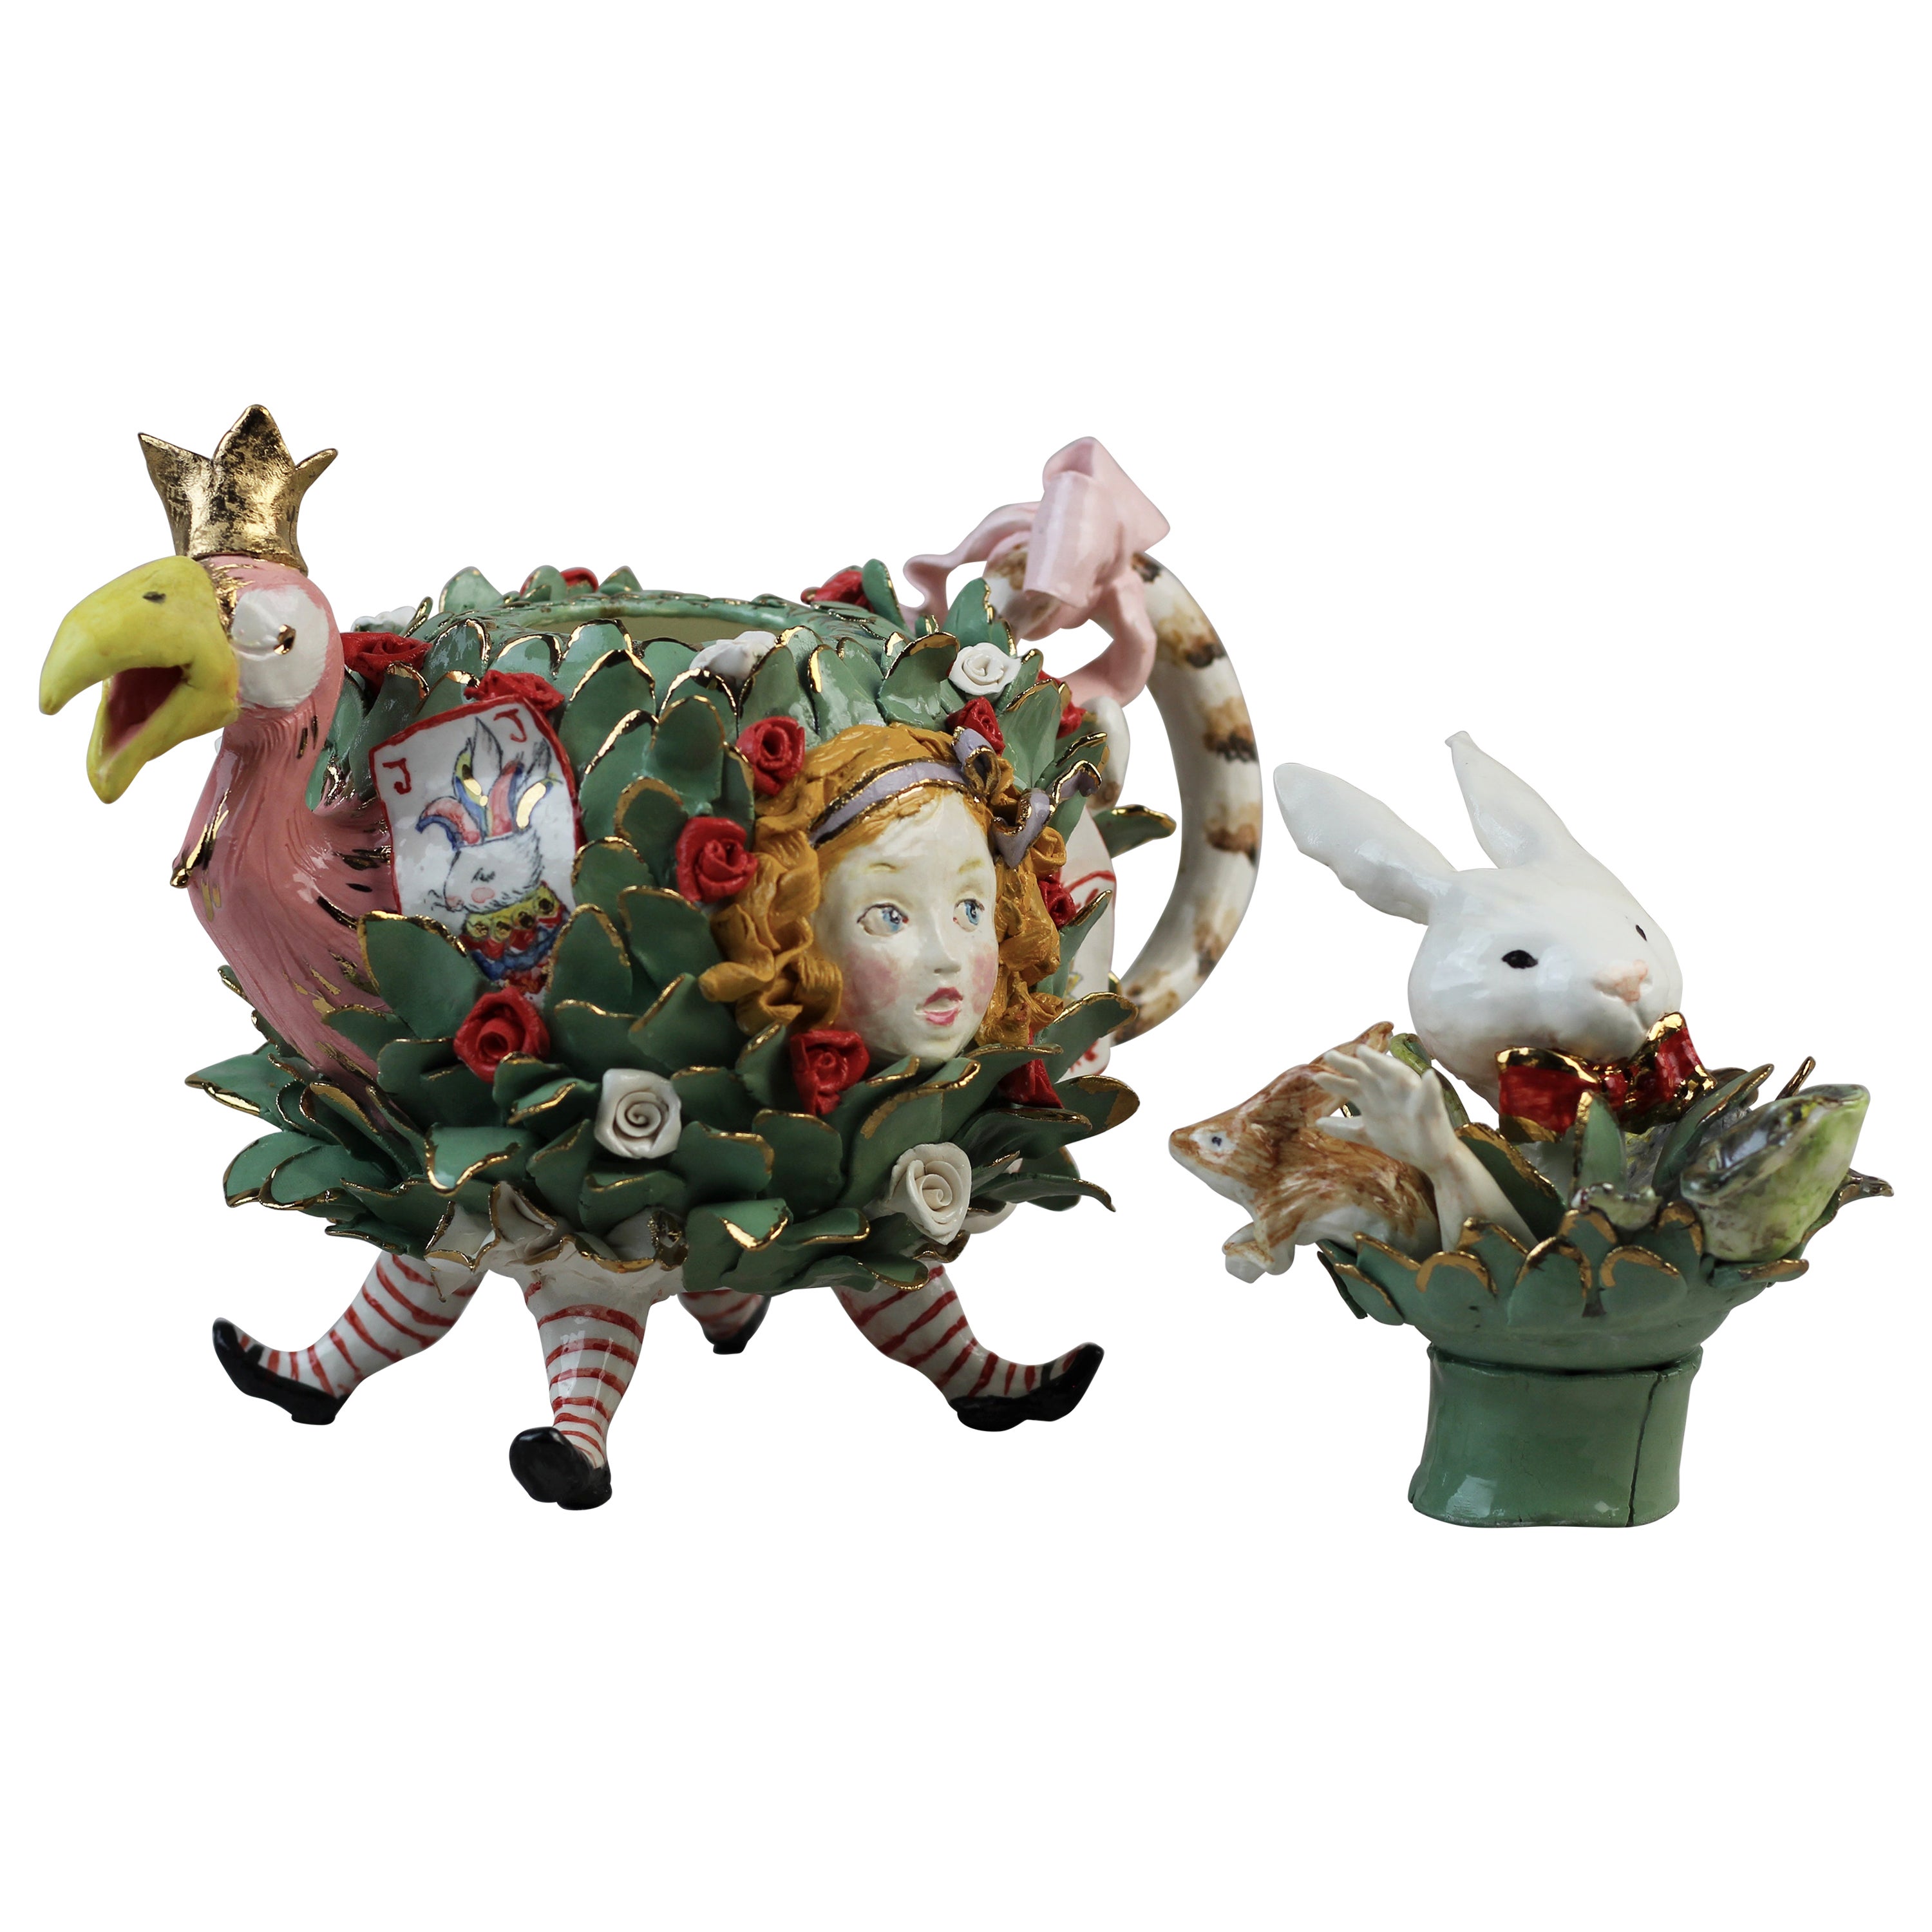 Alice in Wonderland Teapot, Handmade in Italy, Luxury Handcrafted Design 2021